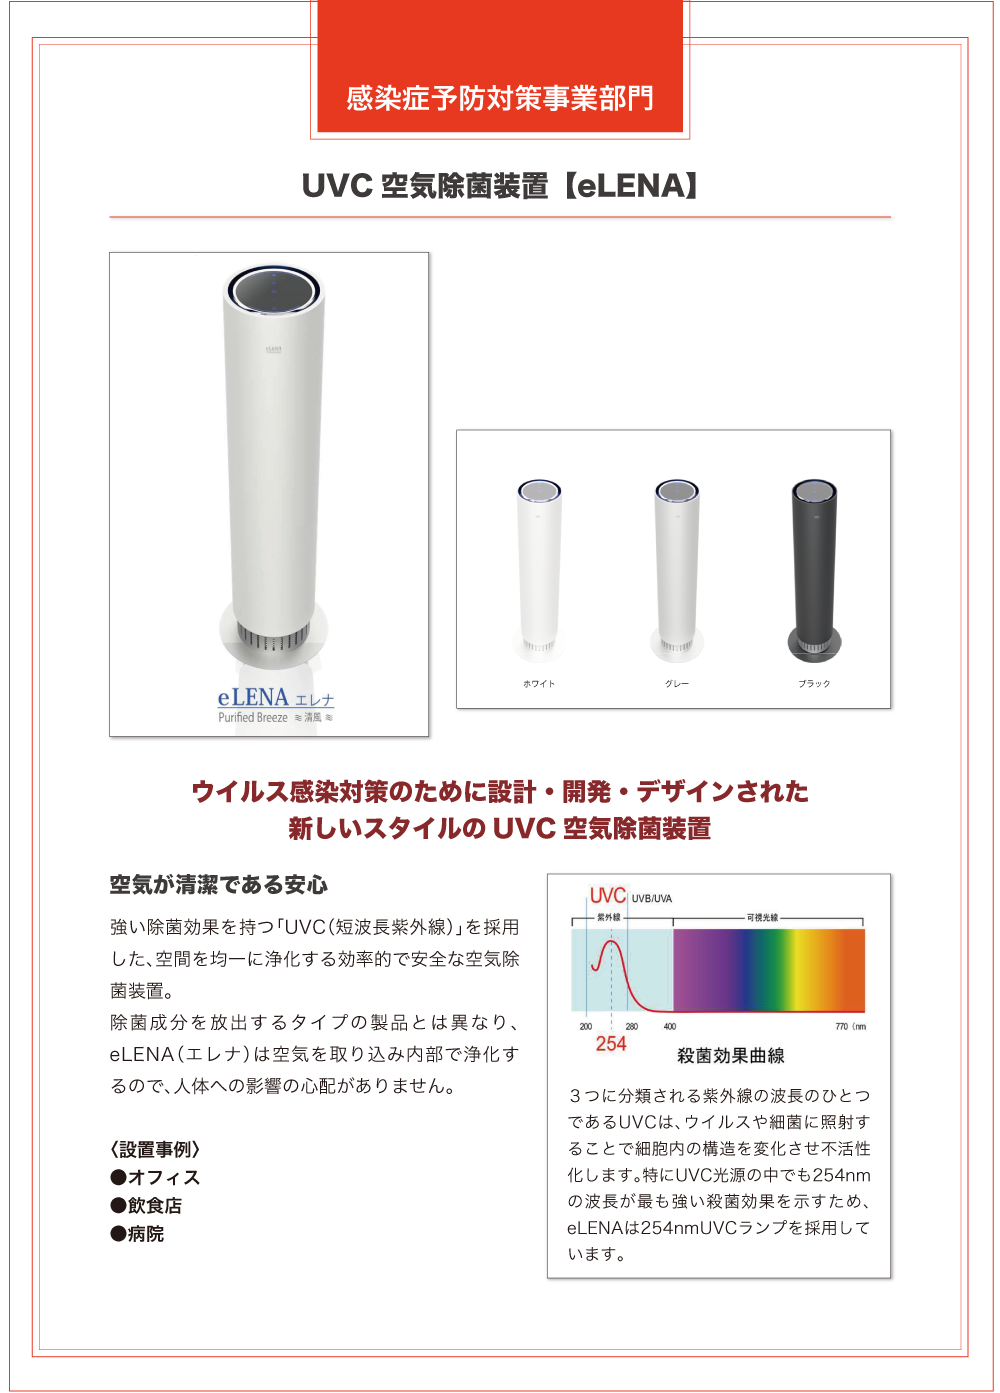 UVC空気除菌装置【eLENA】のご紹介